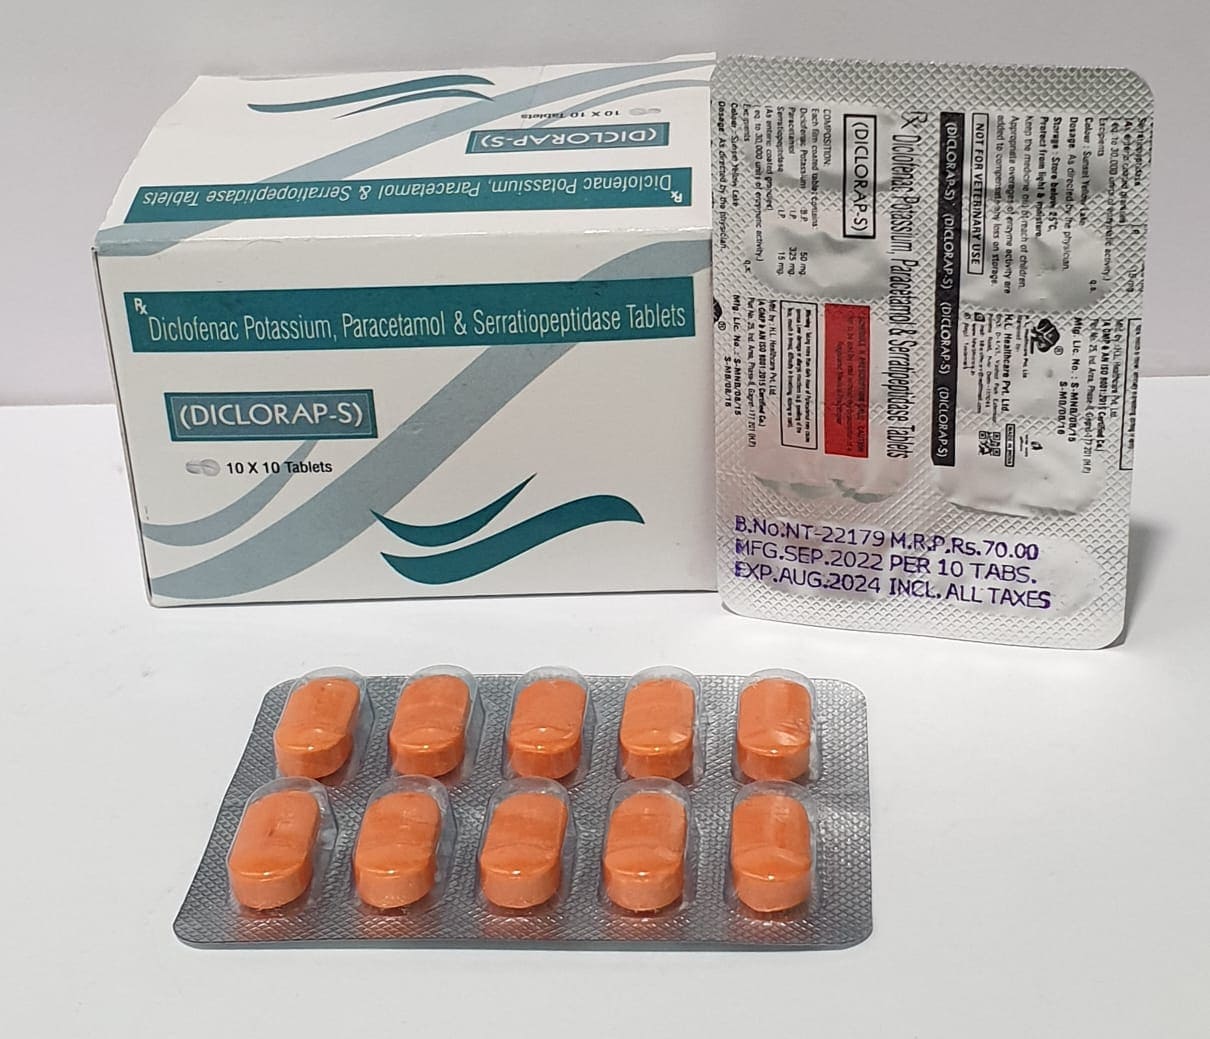 Diclofenac Sodium 50mg Paracetamol 325mg, and Serratiopeptidase 10mg Salt Tablets